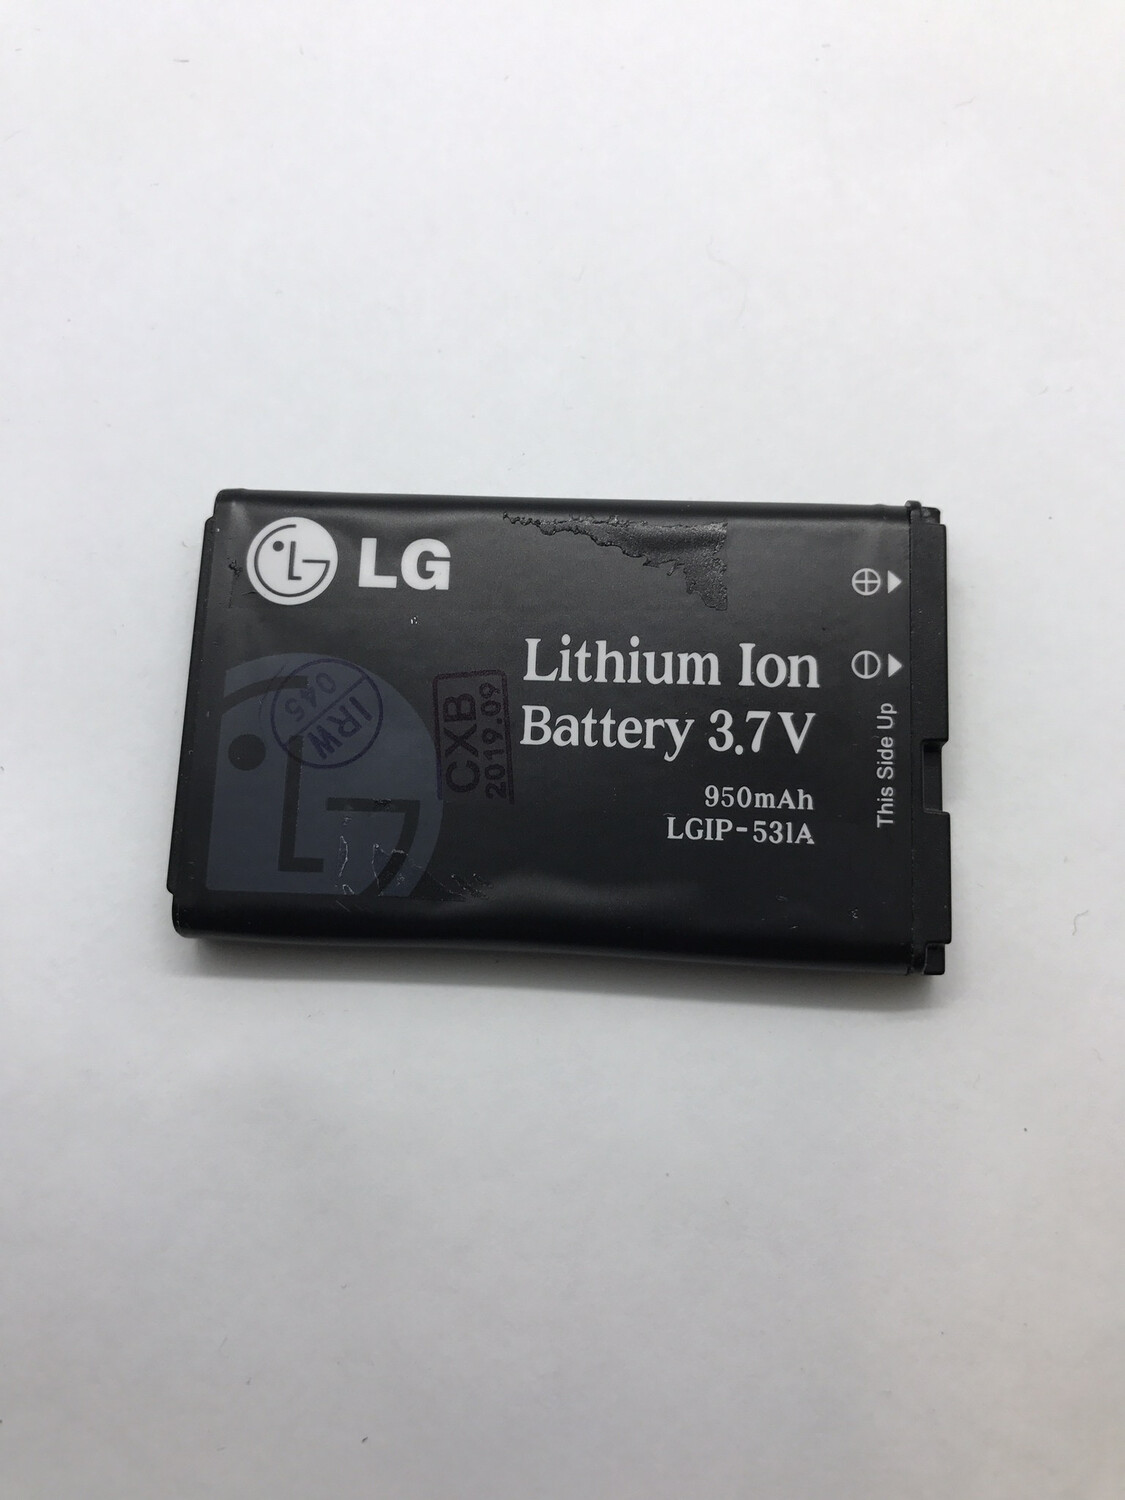 LG Lithium Ion Battery 3.7V